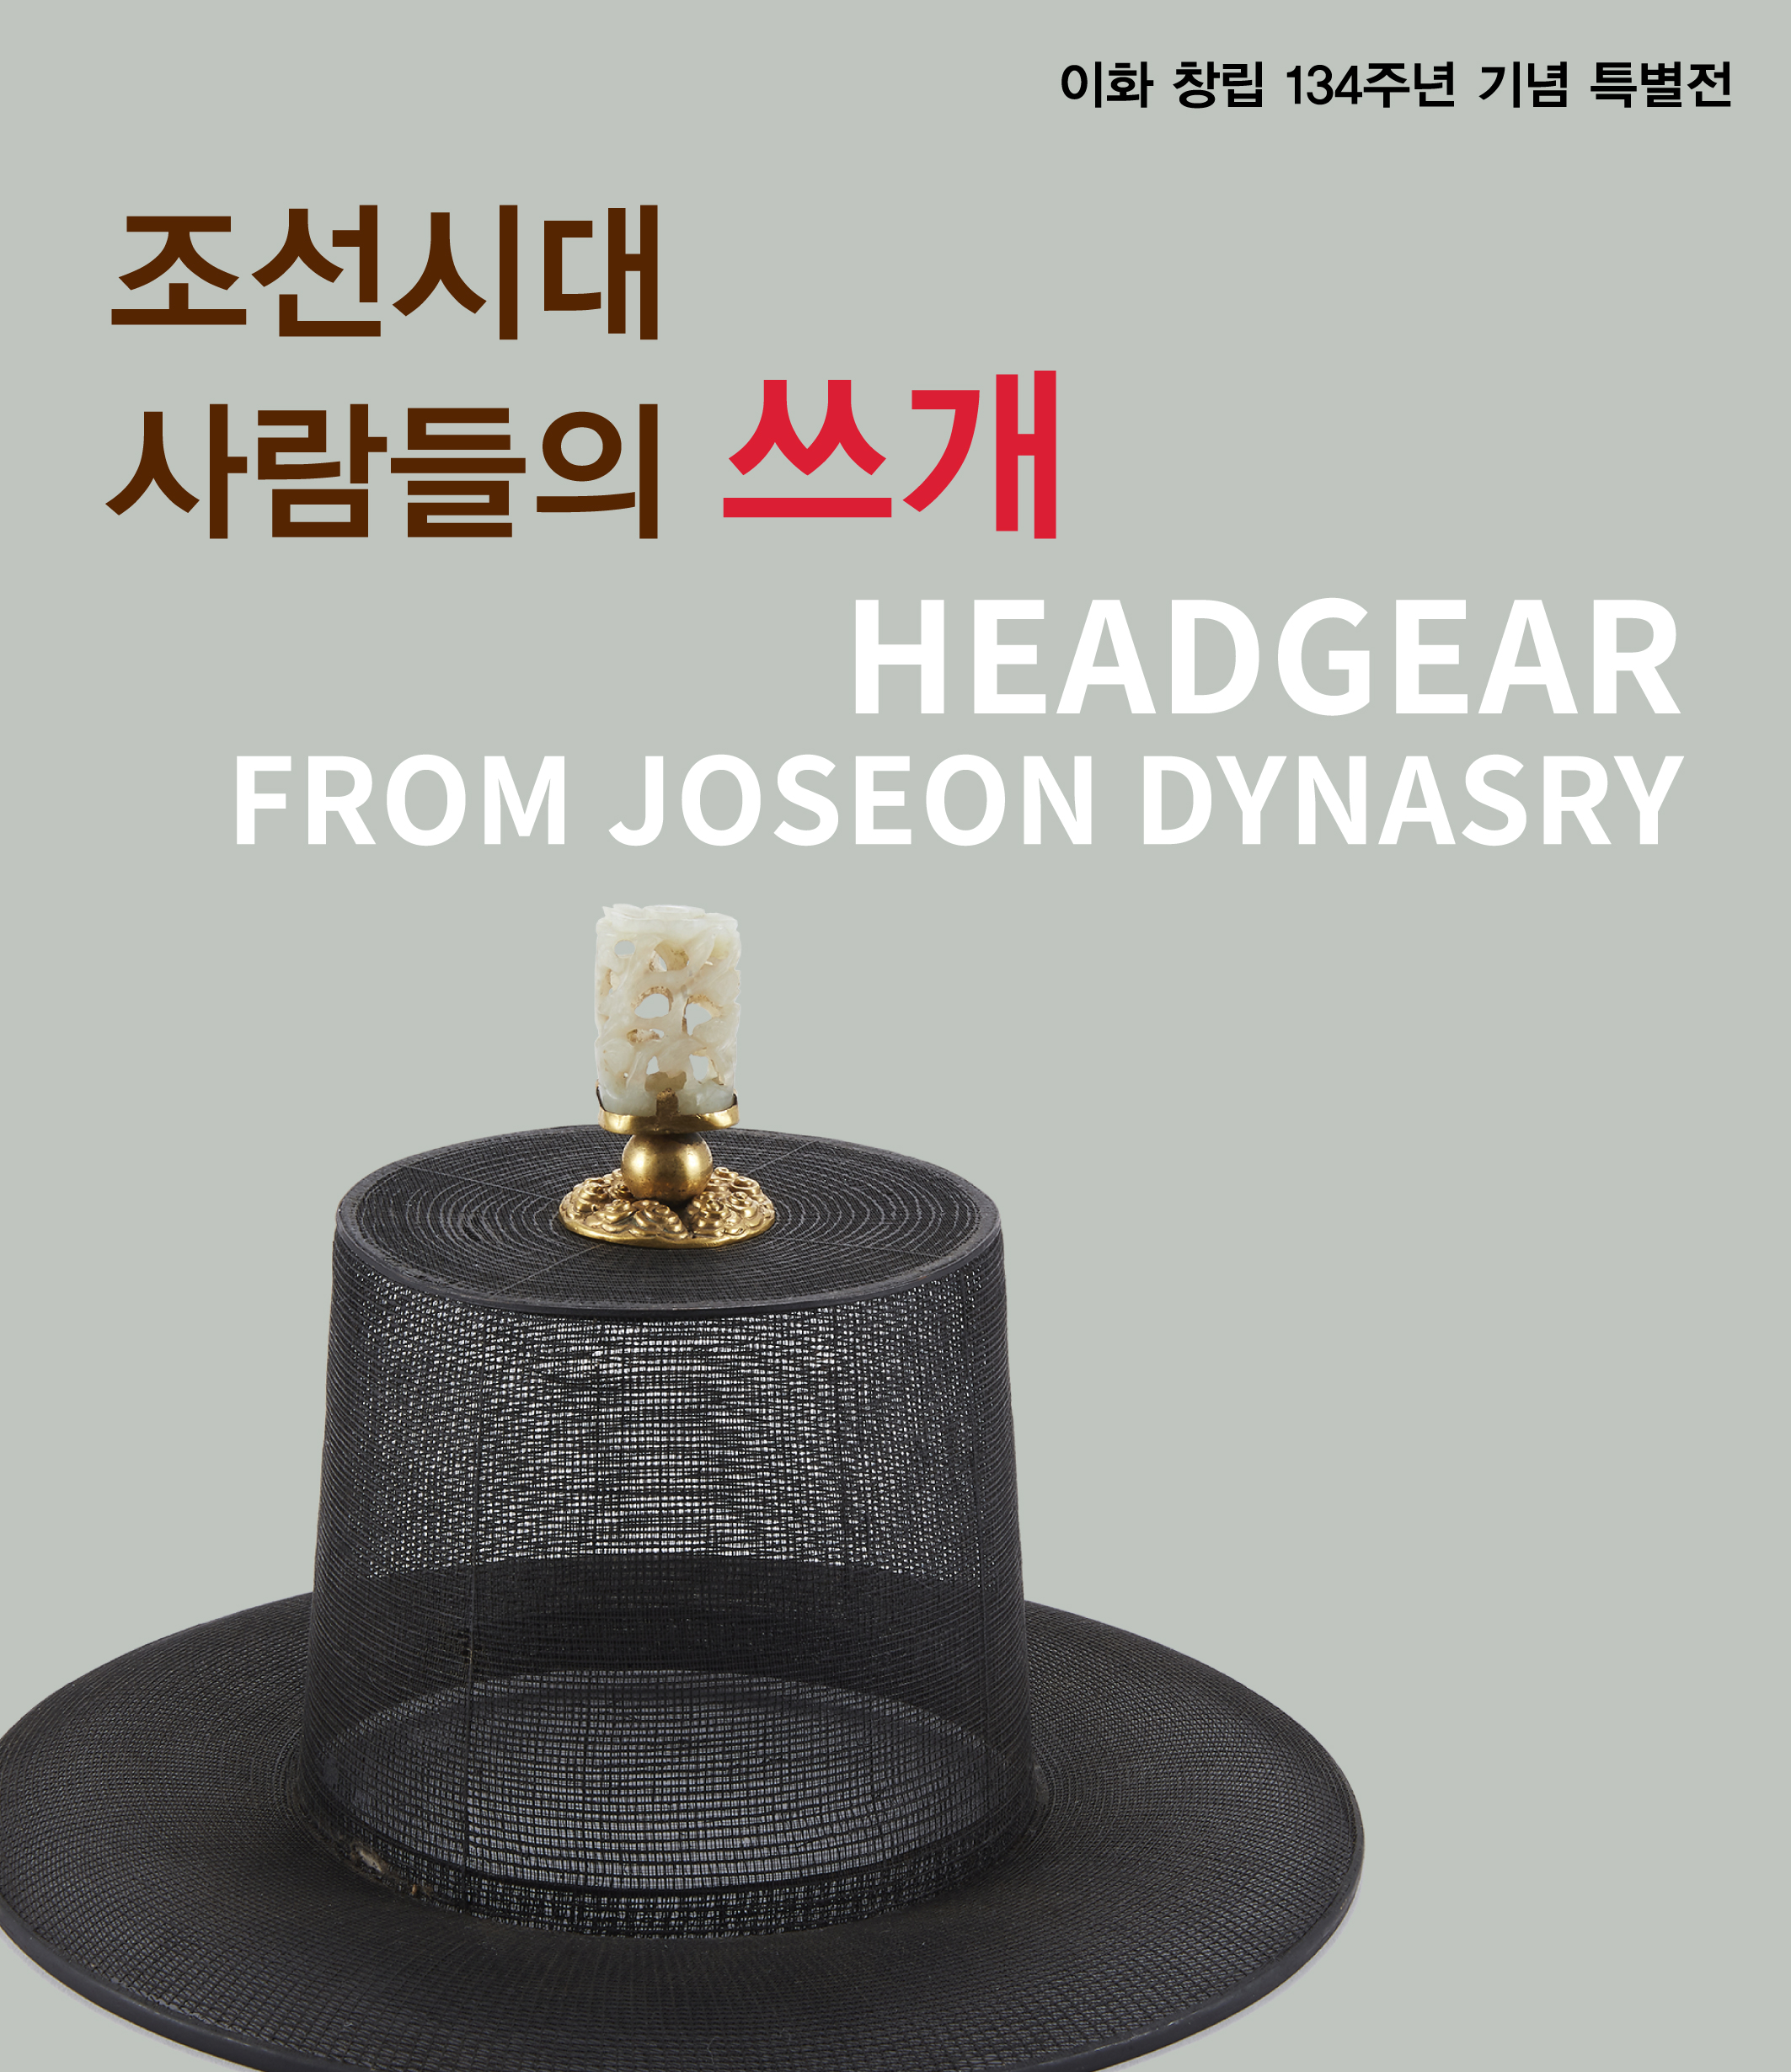 Headgear from Joseon Dynasty